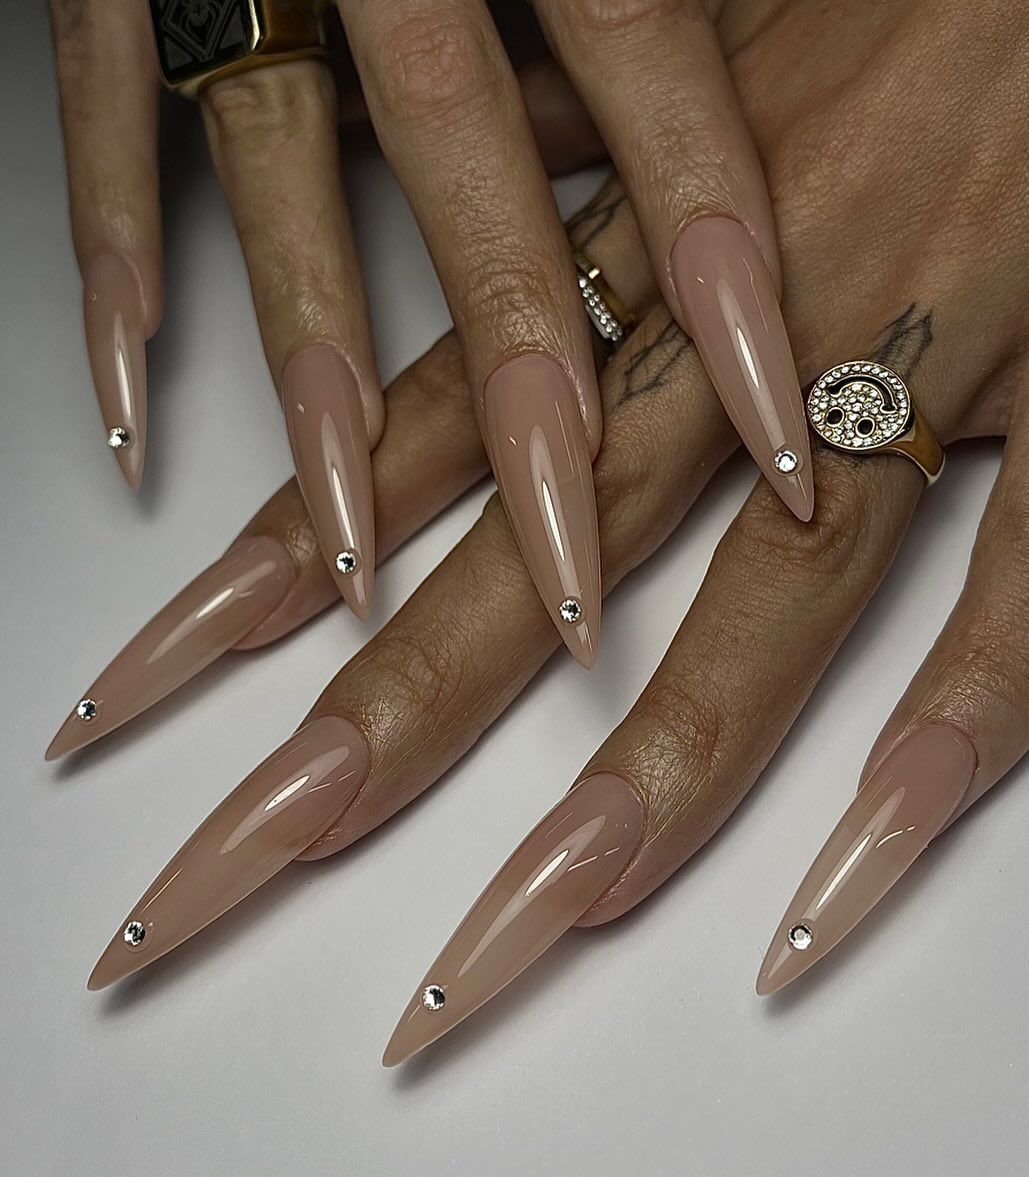 neutral classy winter nails